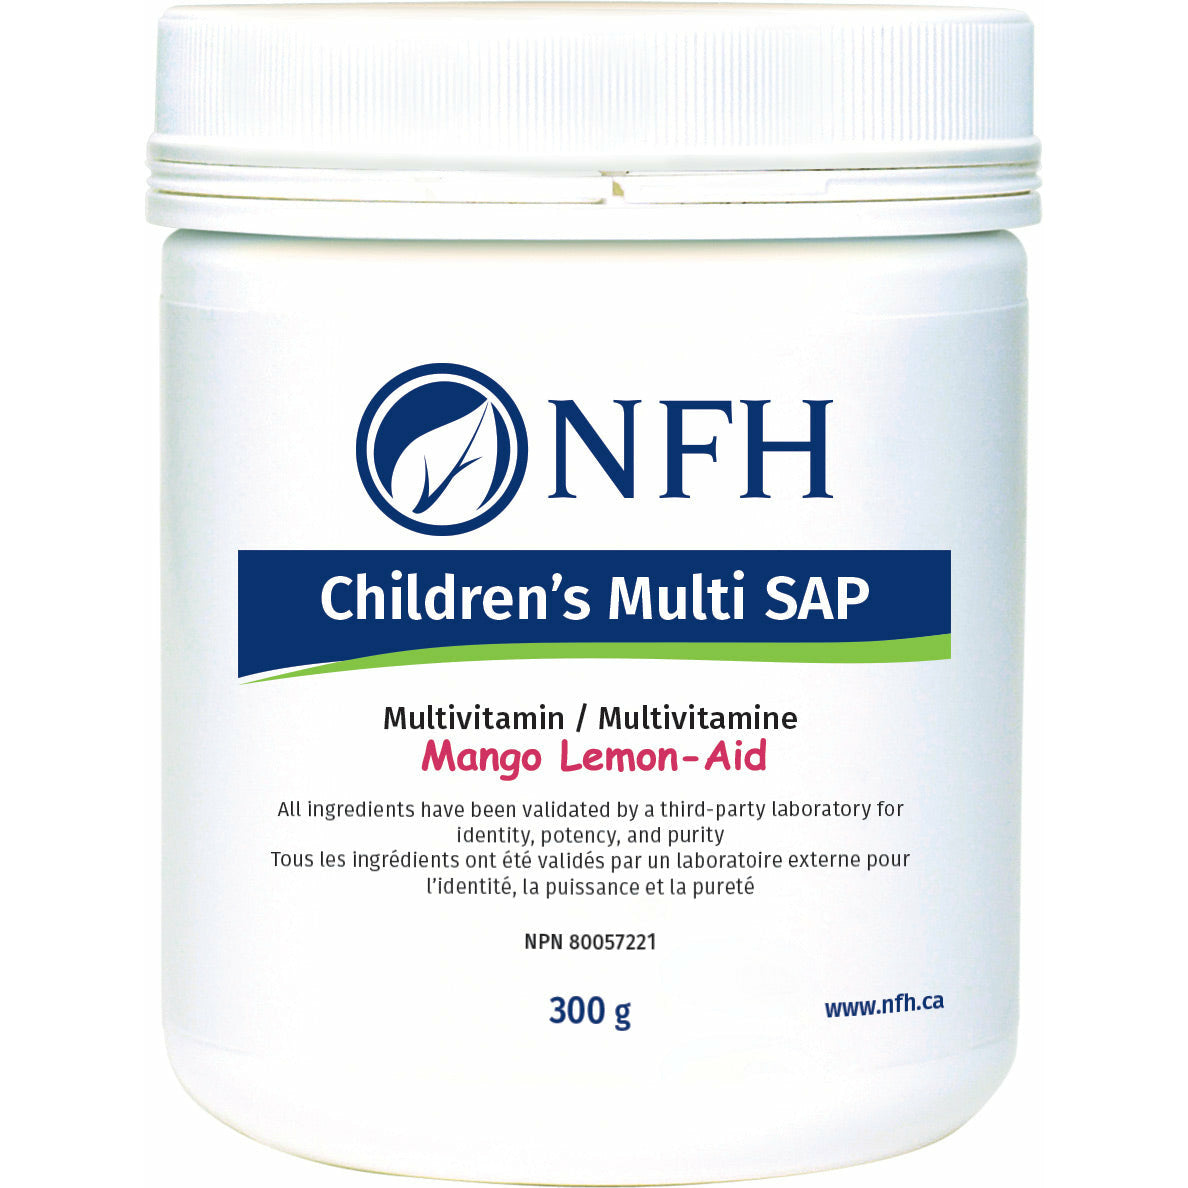 Children's multi SAP Mango Lemon-Aid 300 g Powder